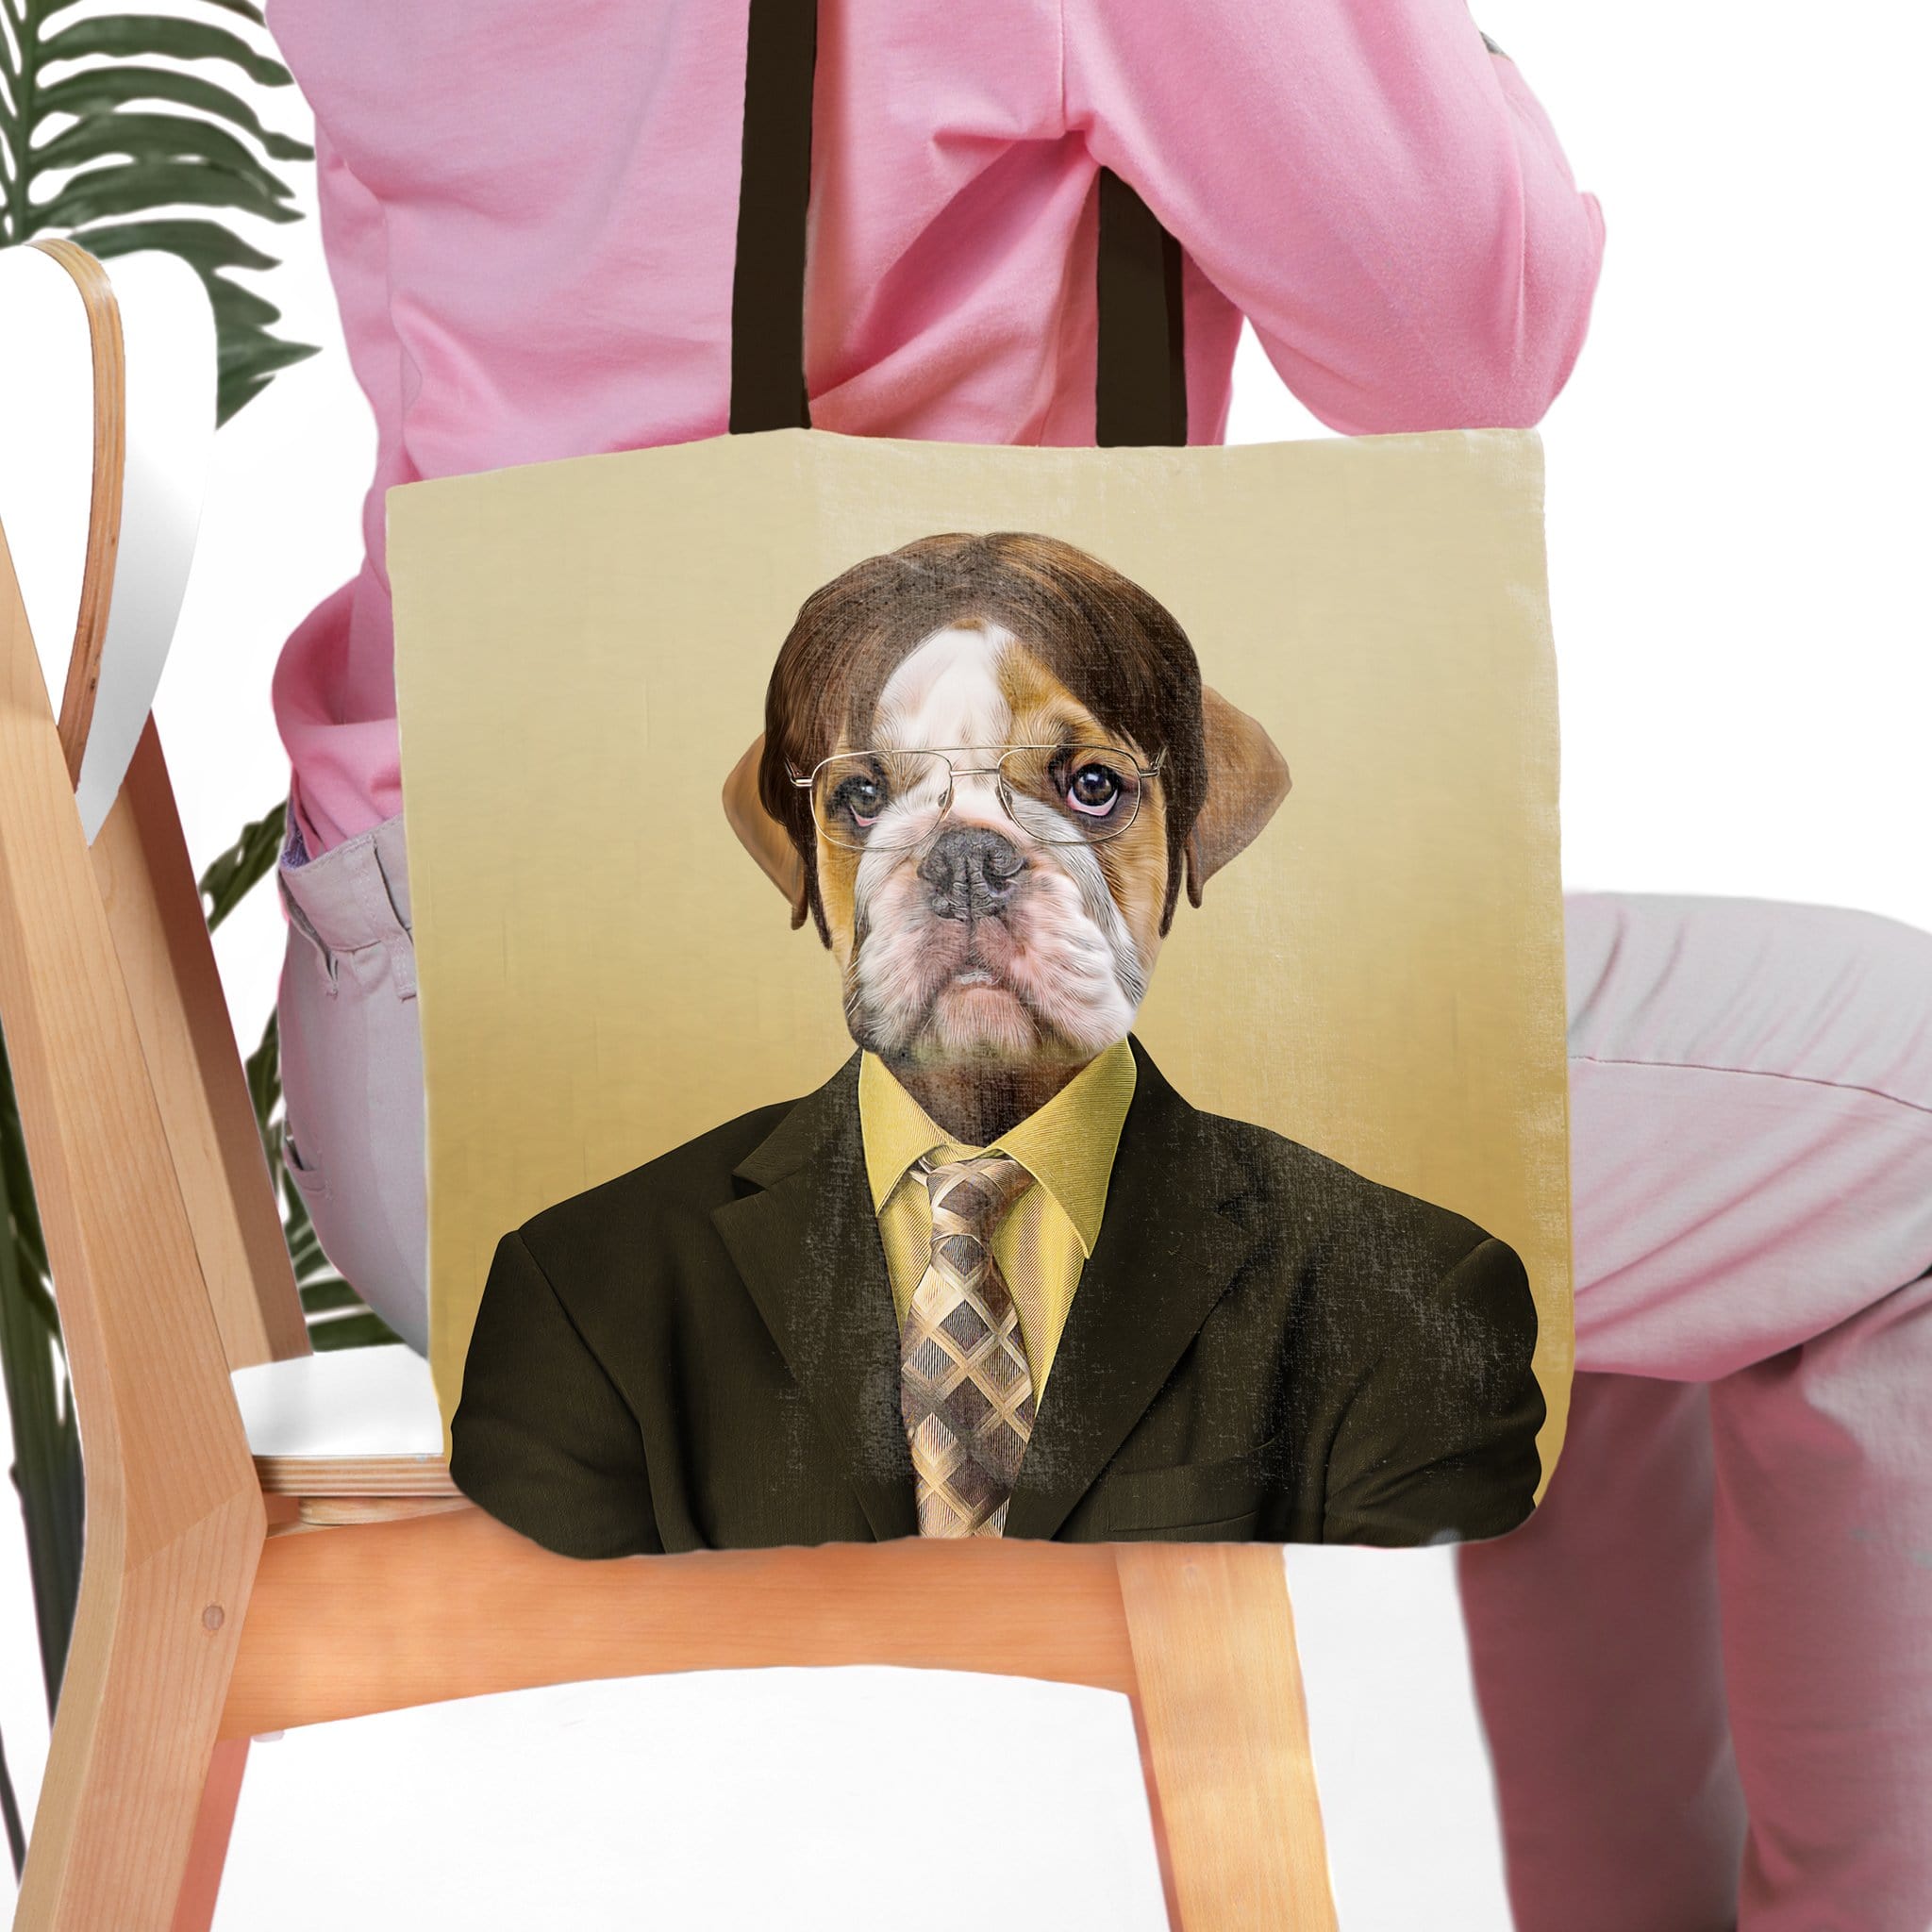 Bolsa de tela personalizada para mascotas &#39;Dwight Woofer&#39;